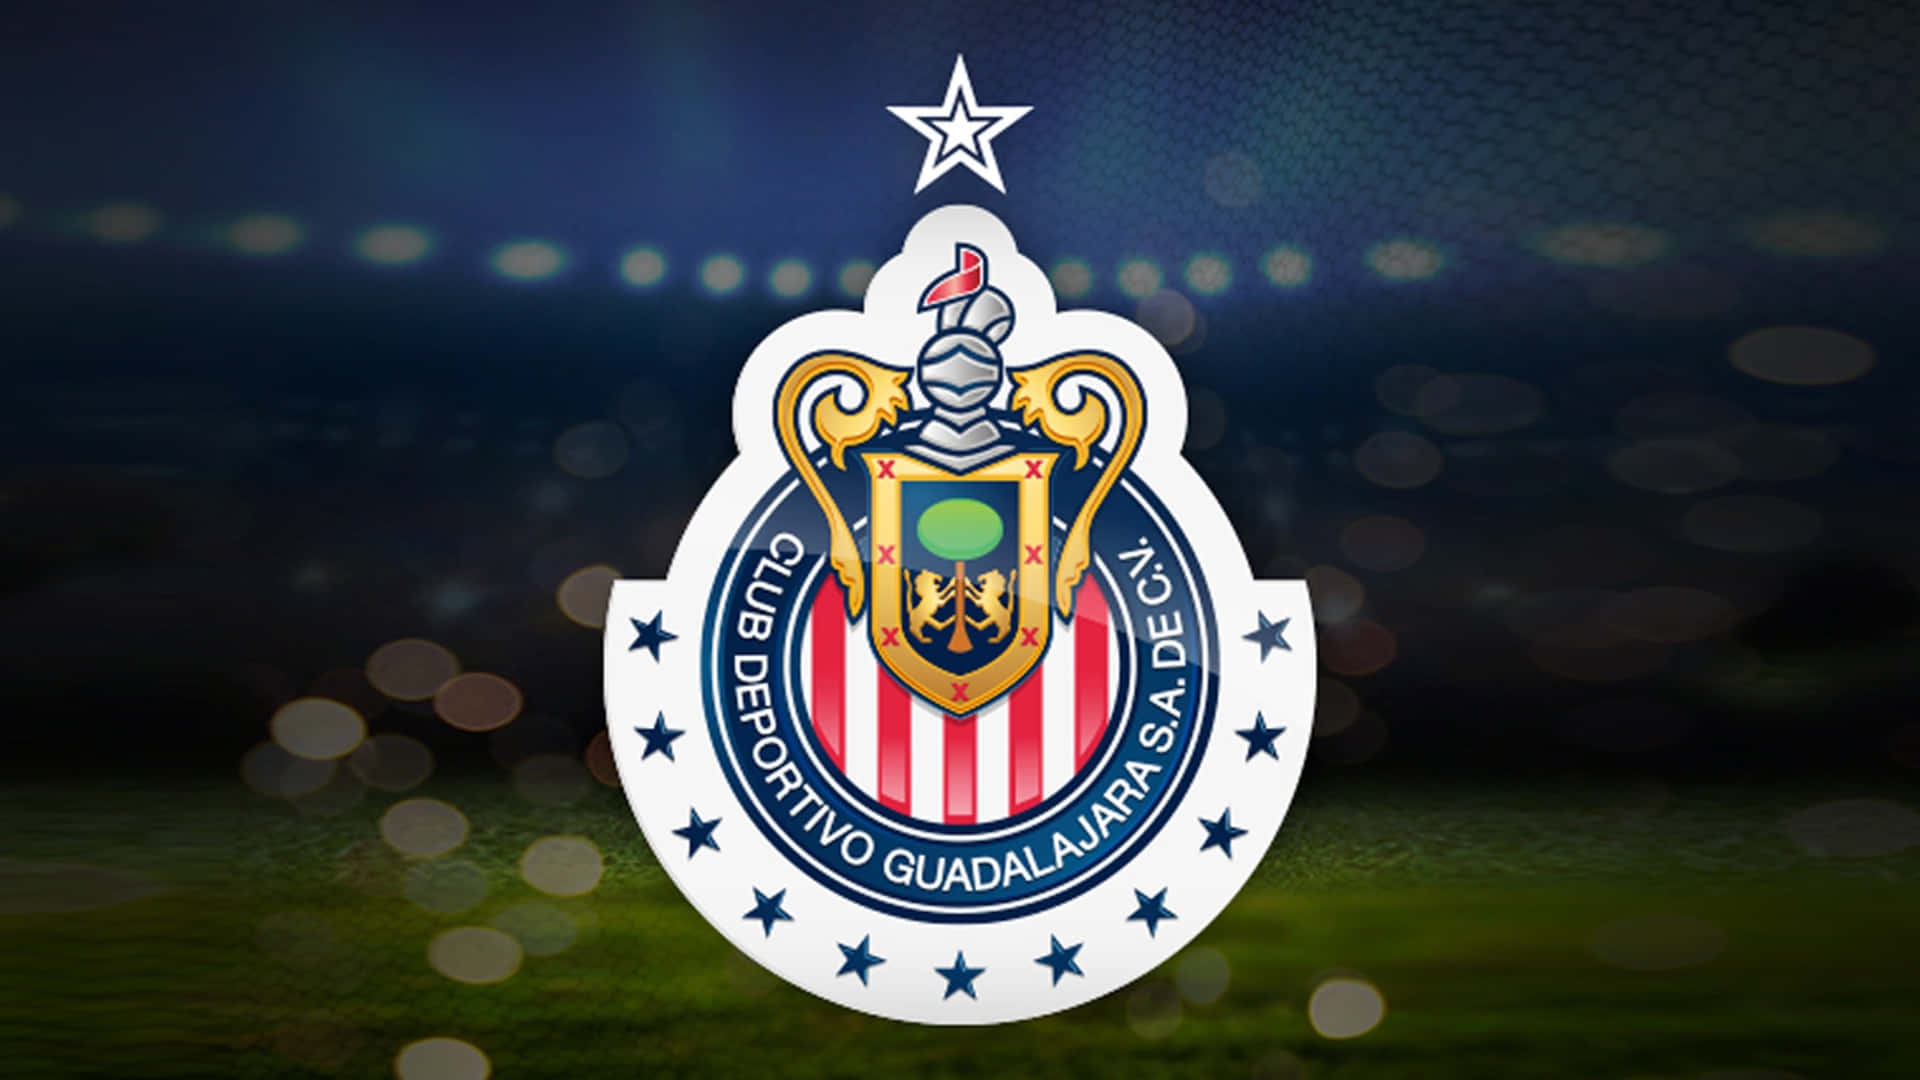 Chivas Guadalajara Club Crest Night Background Wallpaper